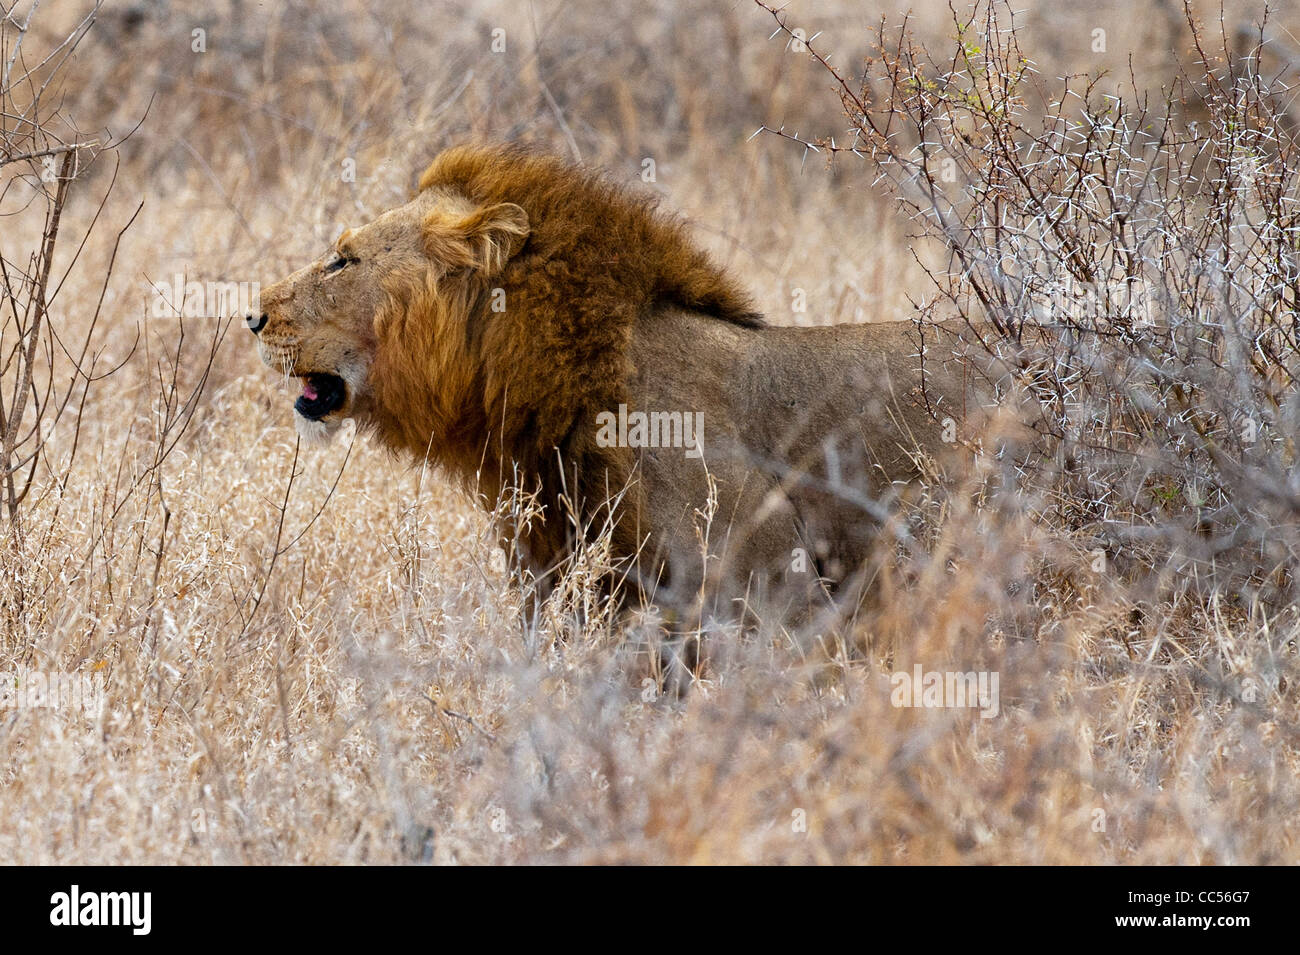 A Male Lion prowling Stock Photo